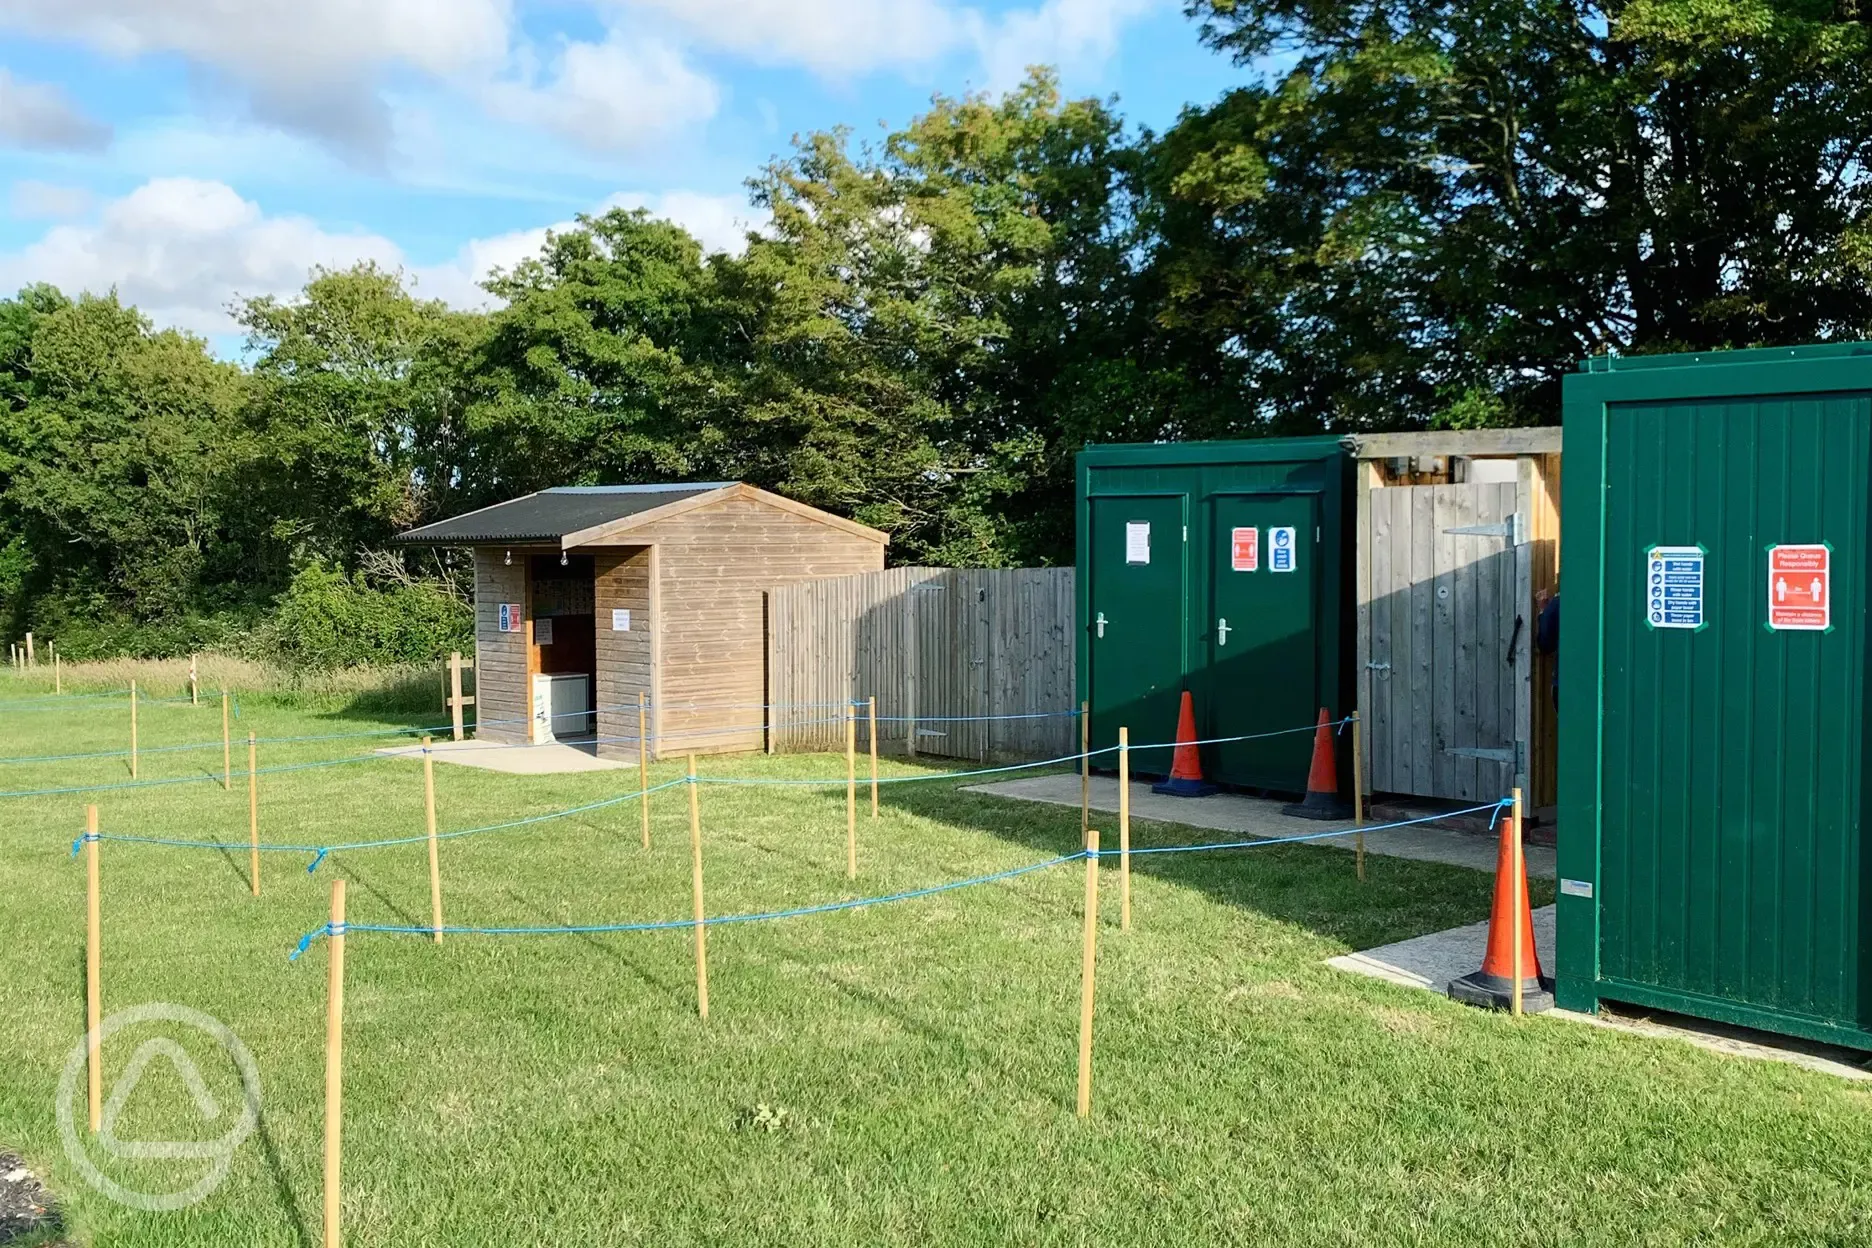 Toilets and facilities at Fontmills Farm Campsite